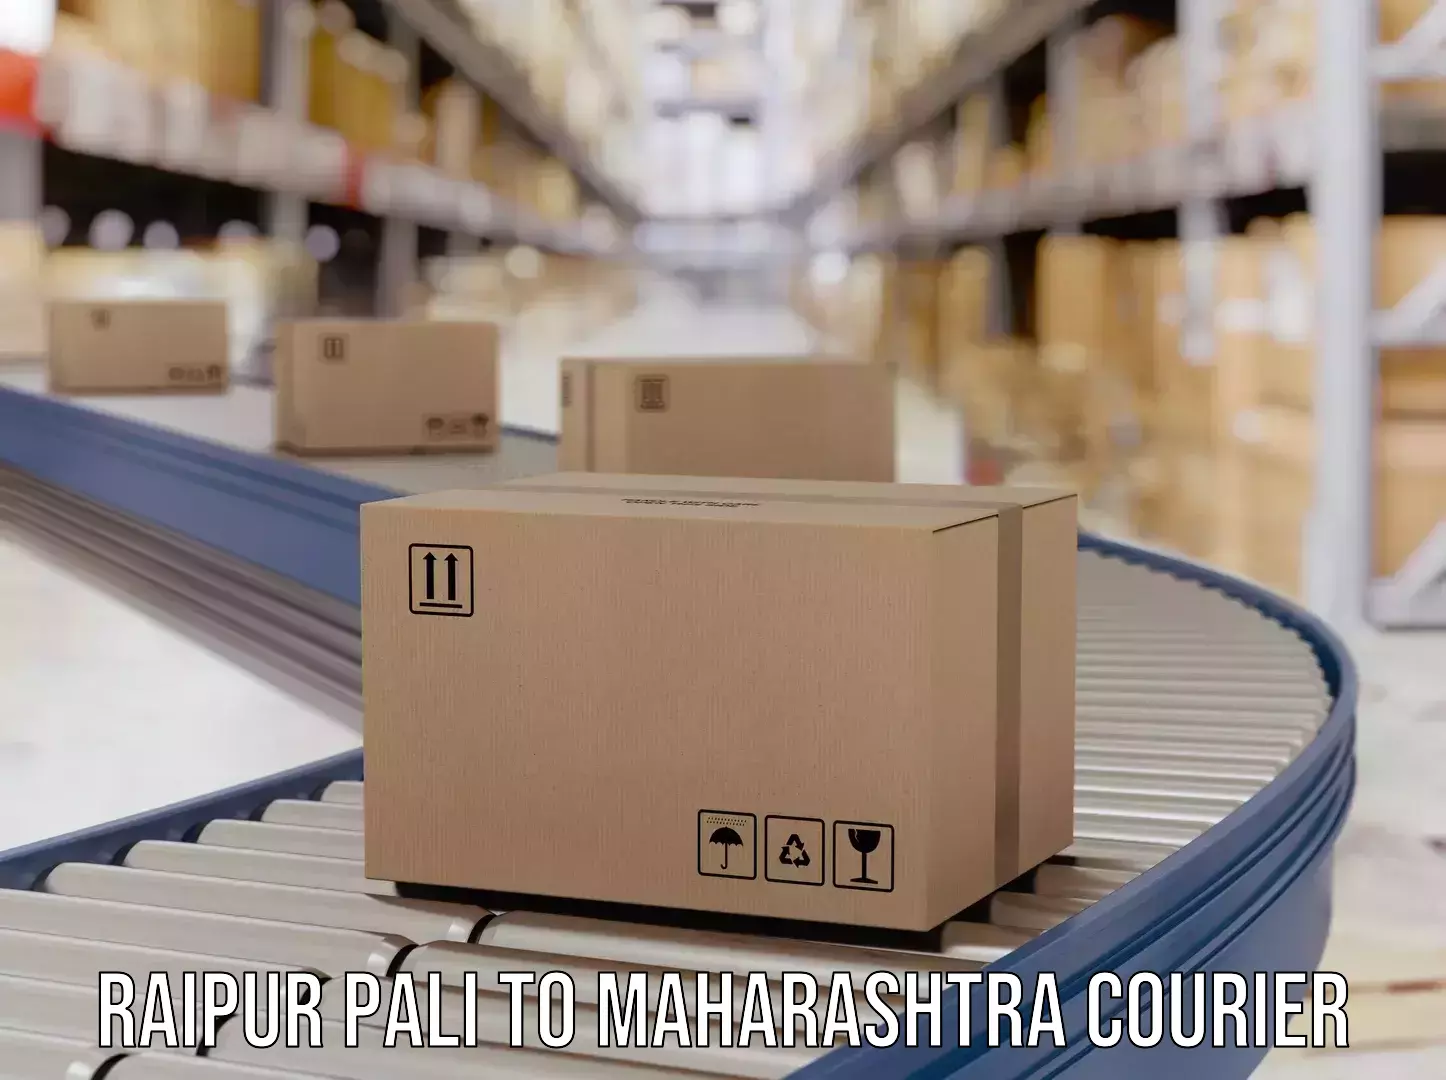 Courier service innovation Raipur Pali to Sangameshwar